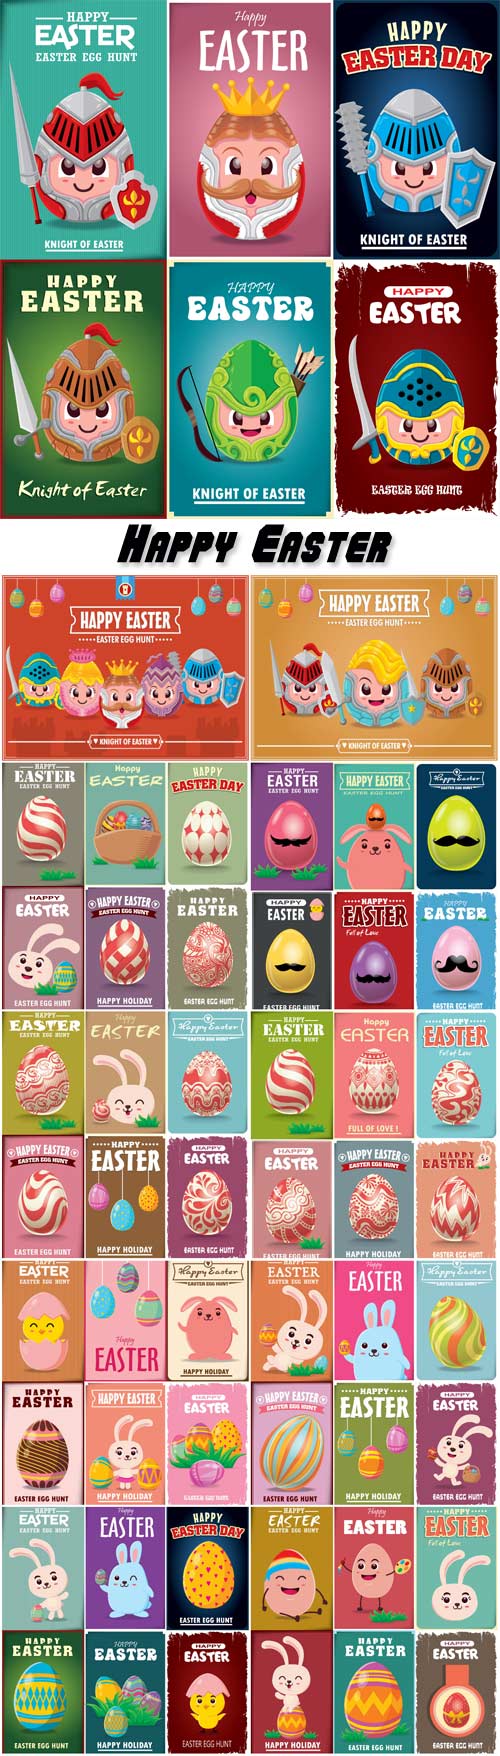 Happy Easter, vintage posters